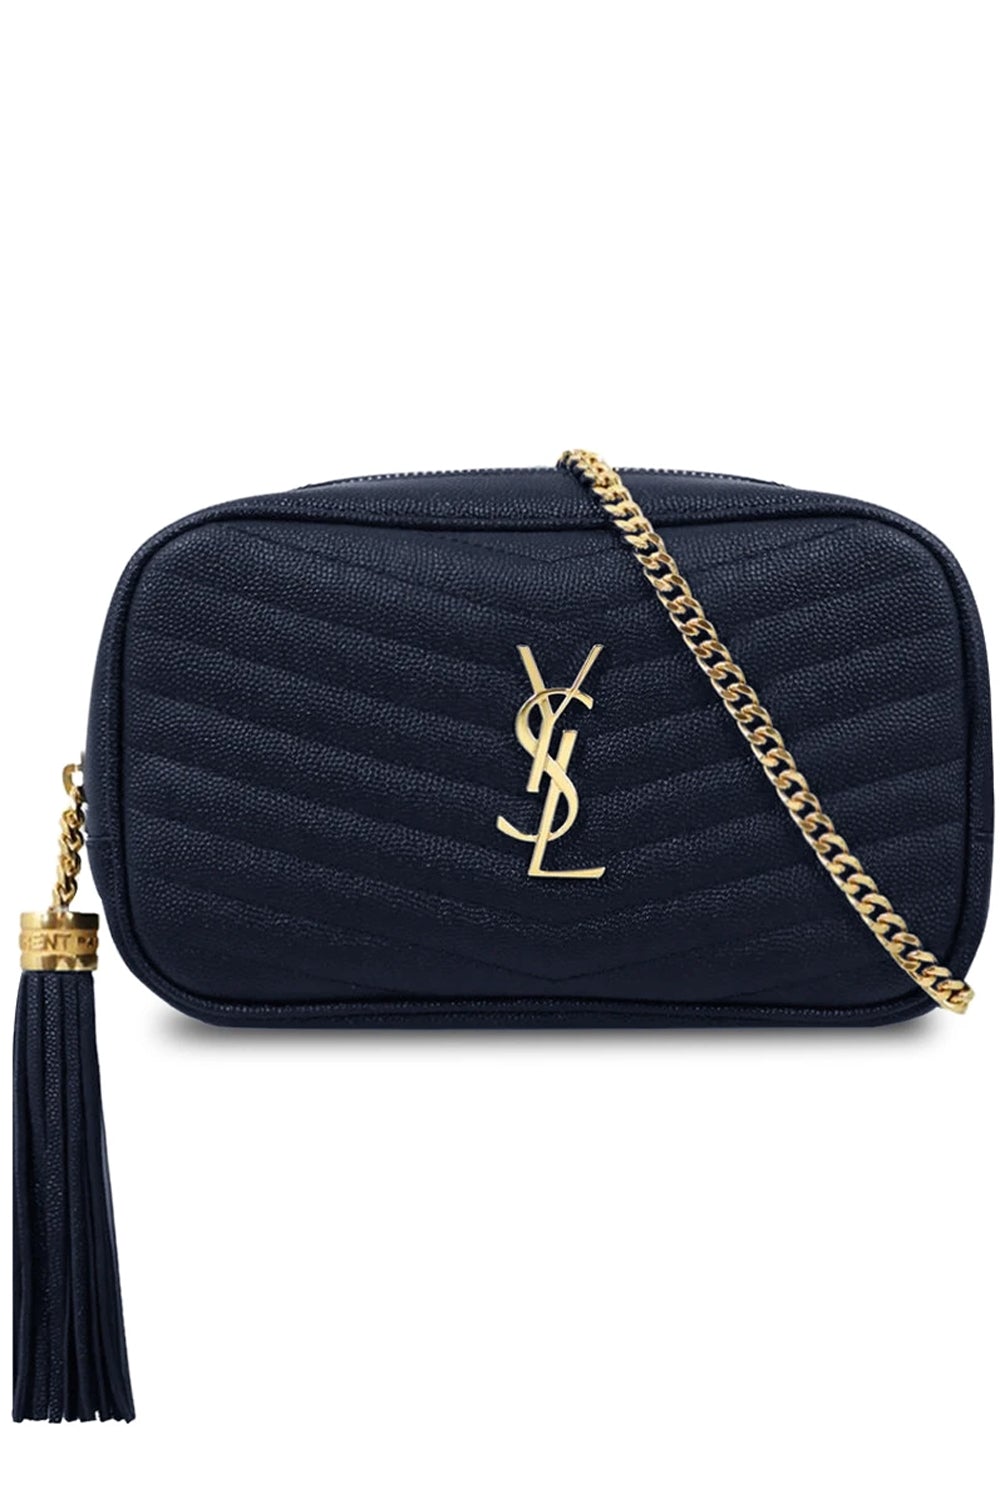 Saint Laurent Gloria Quilted Bag | Fashion Clinic